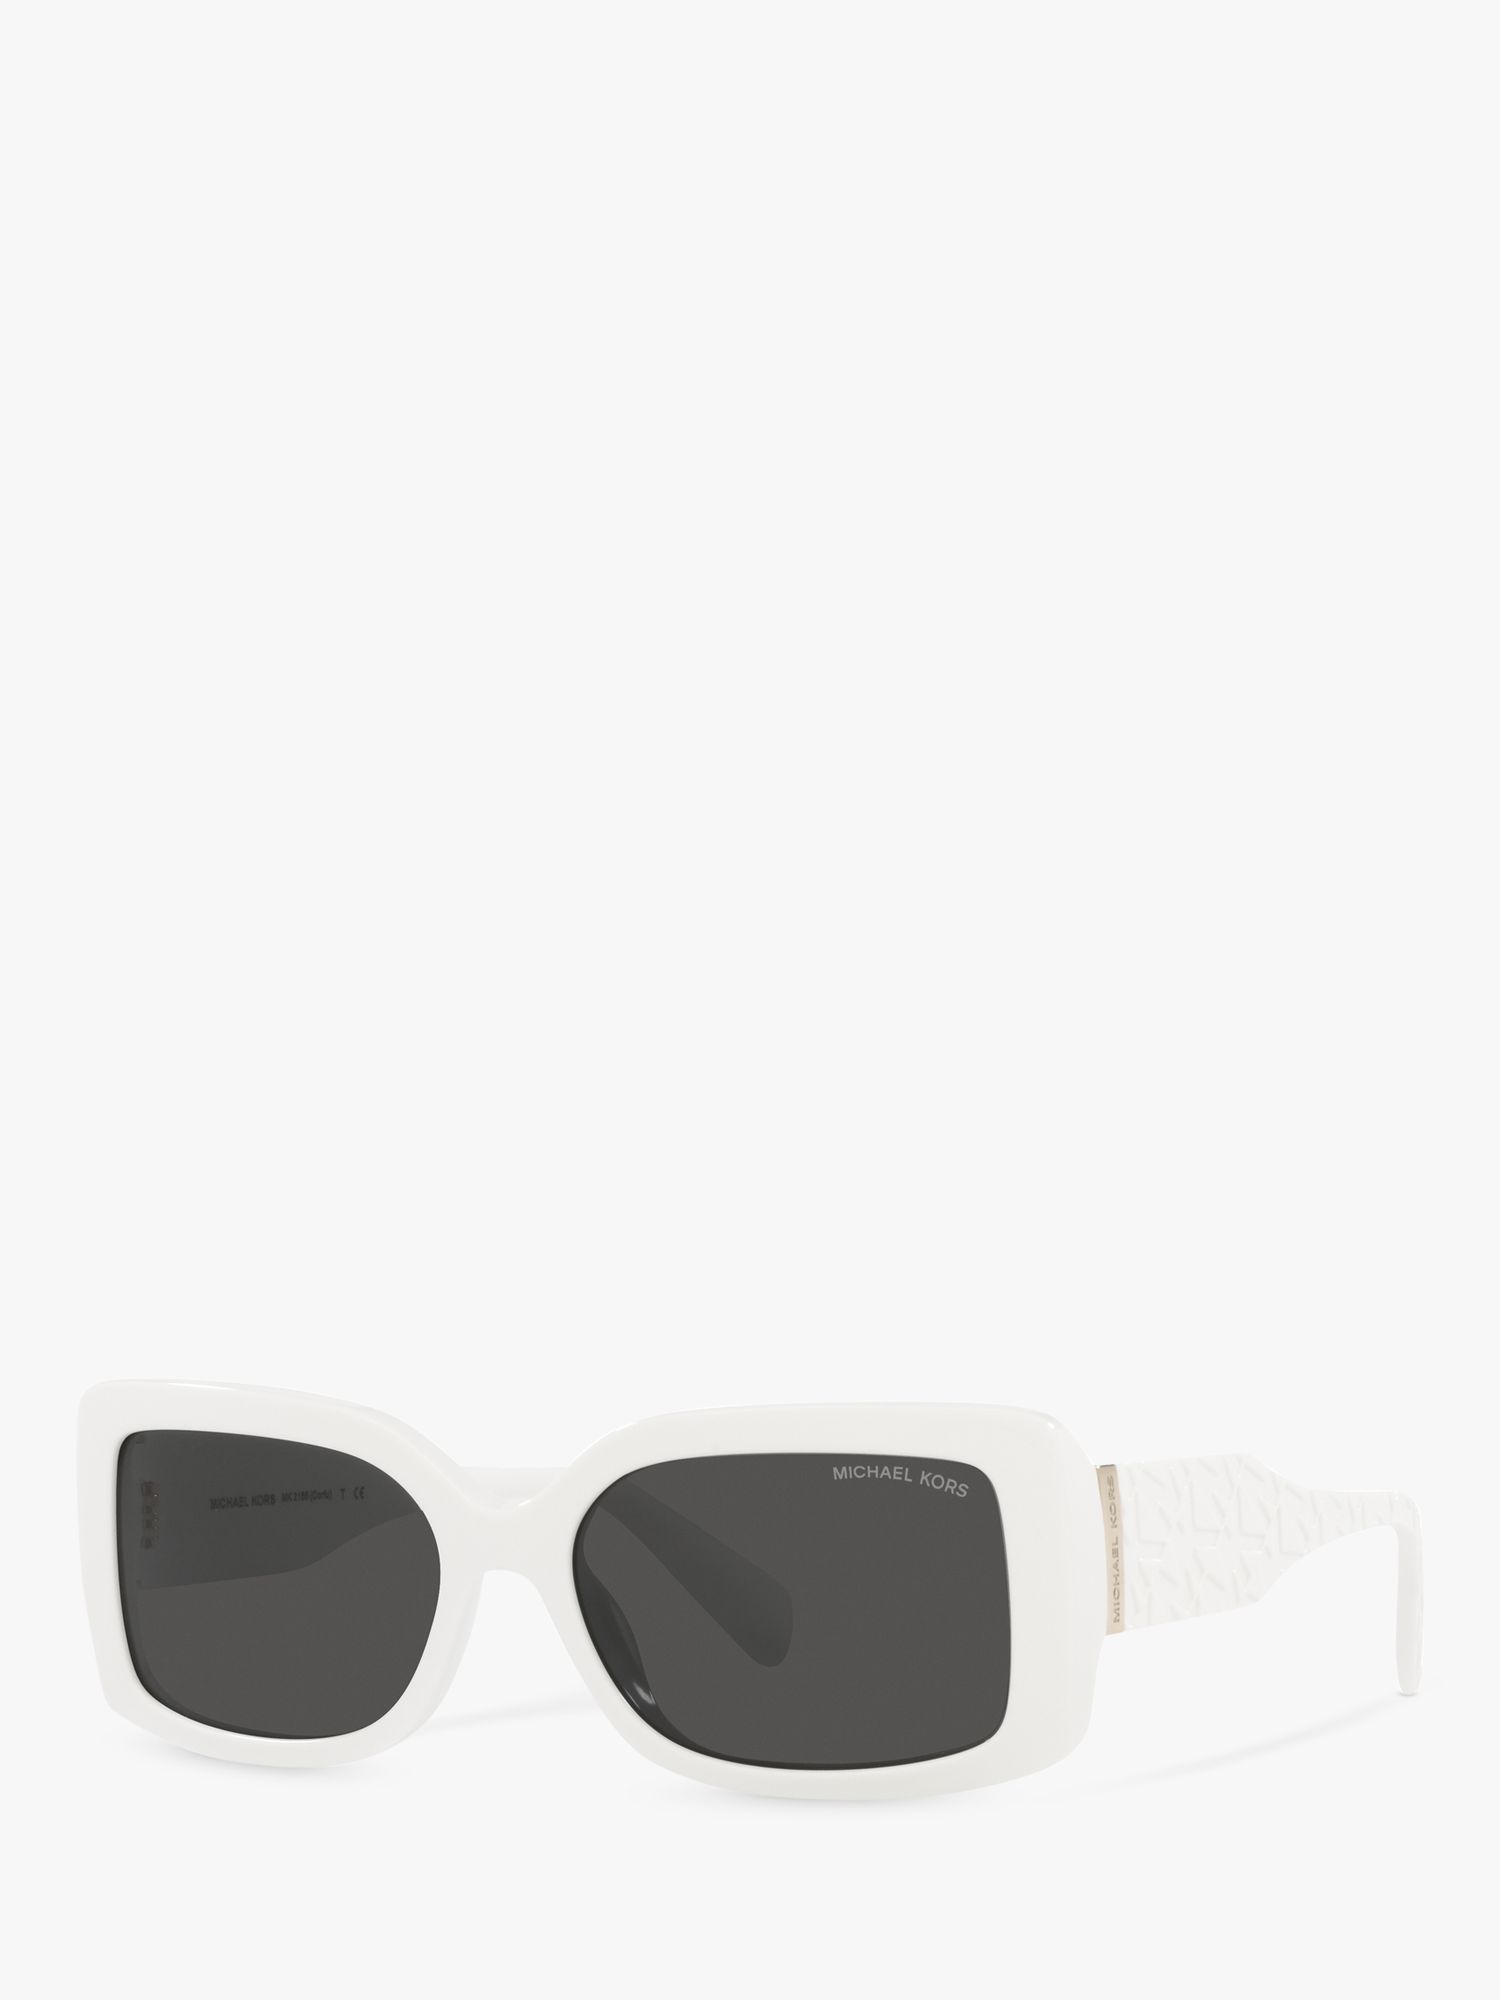 Chanel Cat Eye Sunglasses CH5481H 56 Grey & Dark Grey Sunglasses